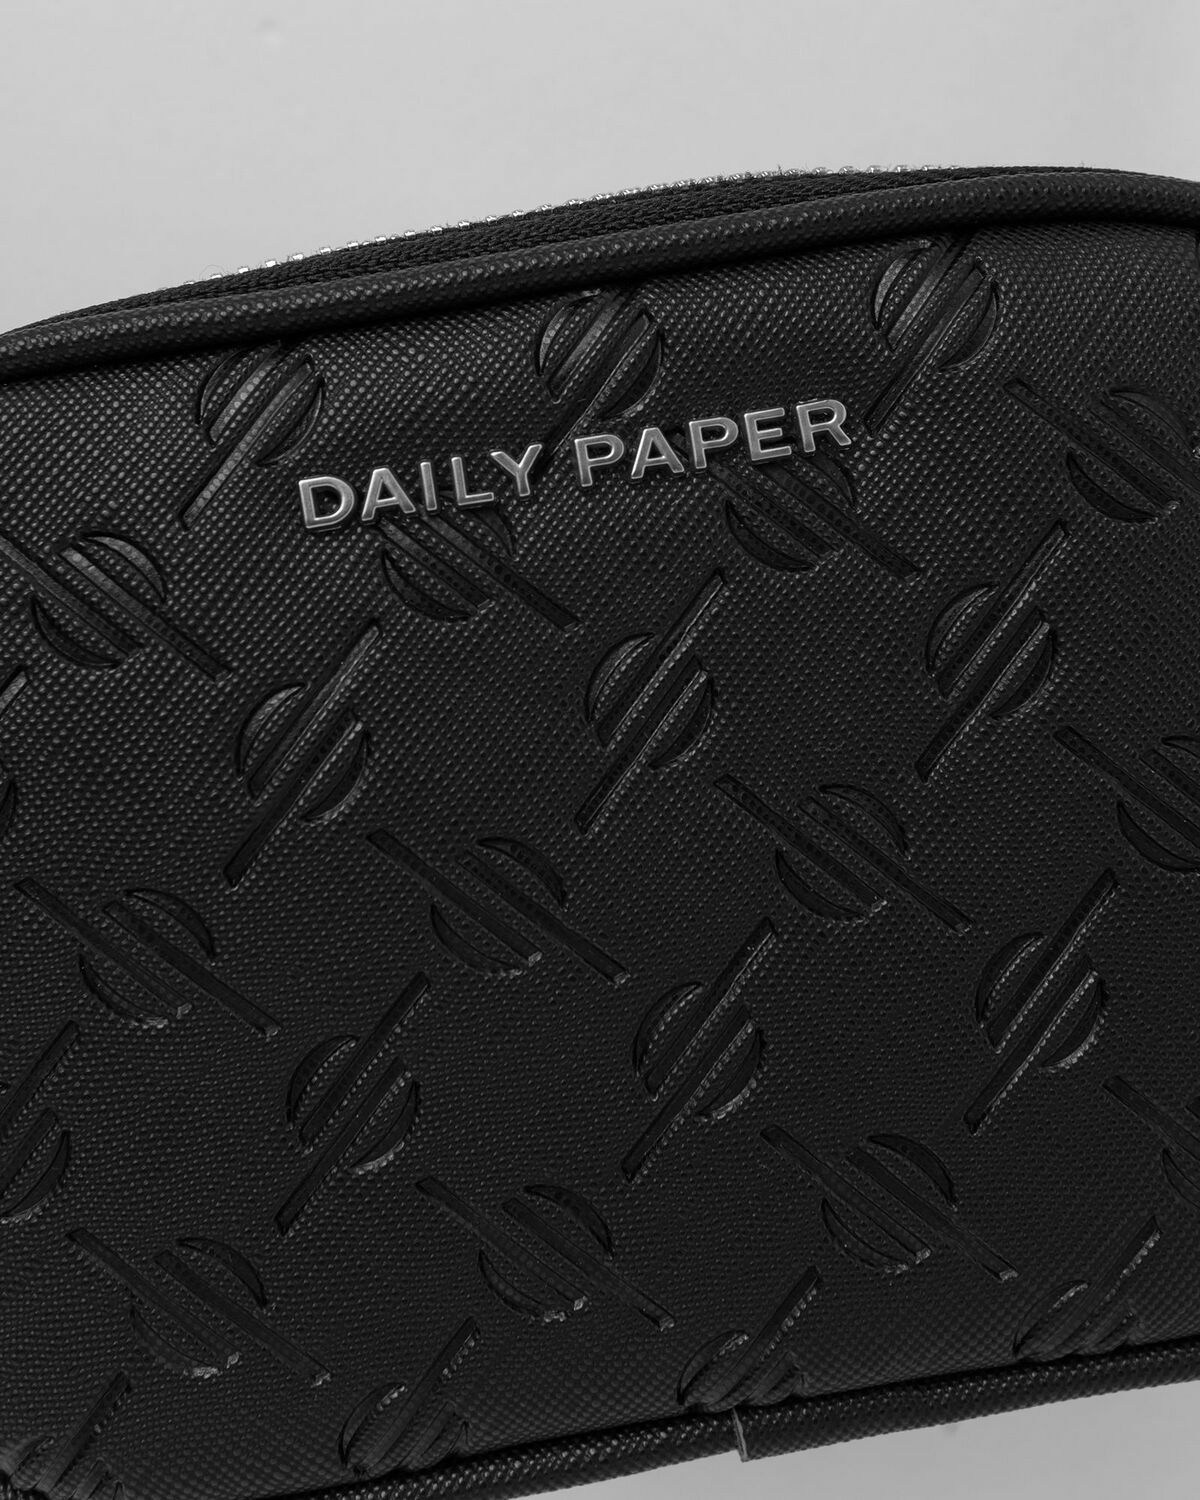 Daily Paper meru monogram bag Black - black